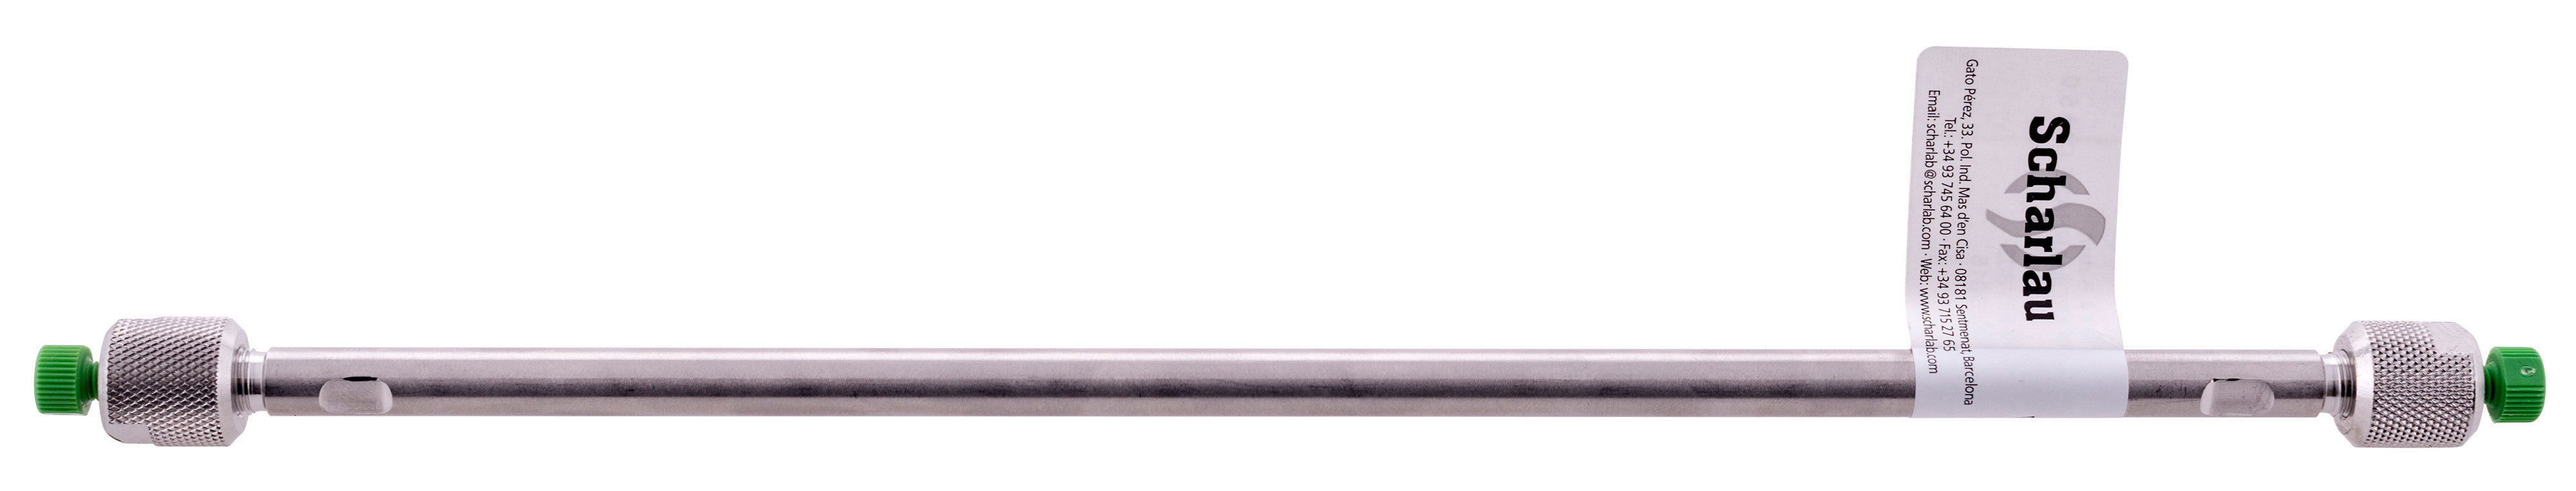 Columna KromaPhase 4,6mm D.I. SCHARLAU. Fase: SIL. Tamaño de particula (µm): 3,5. Tamaño de poro (Å): 100. Longitud (mm): 150. Diámetro interno (mm): 4,6